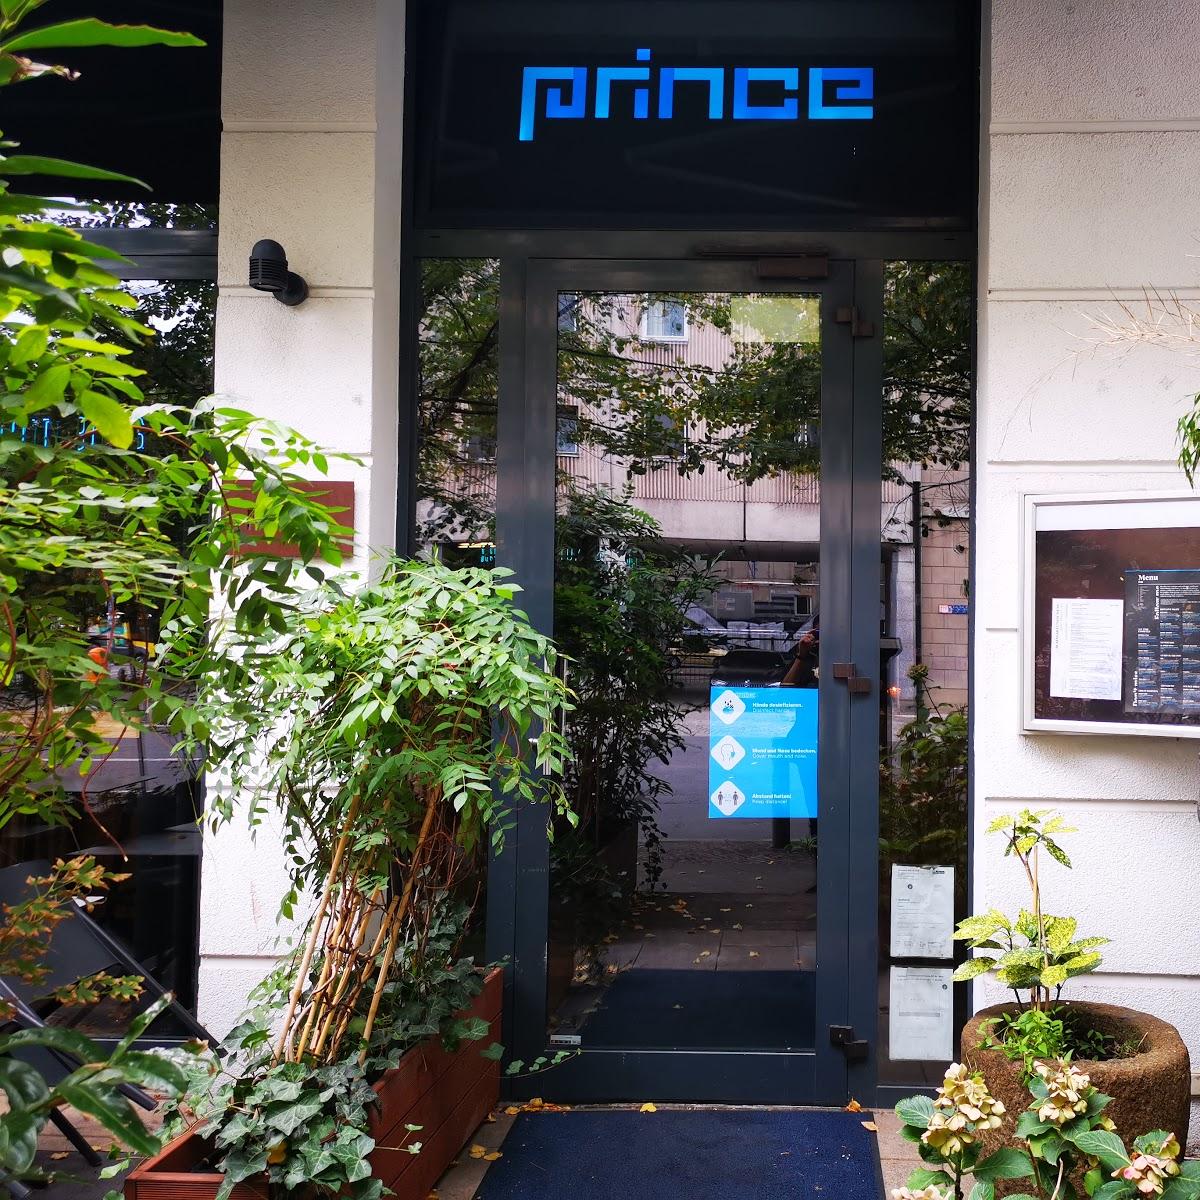 Restaurant "Prince Restaurant" in  Berlin